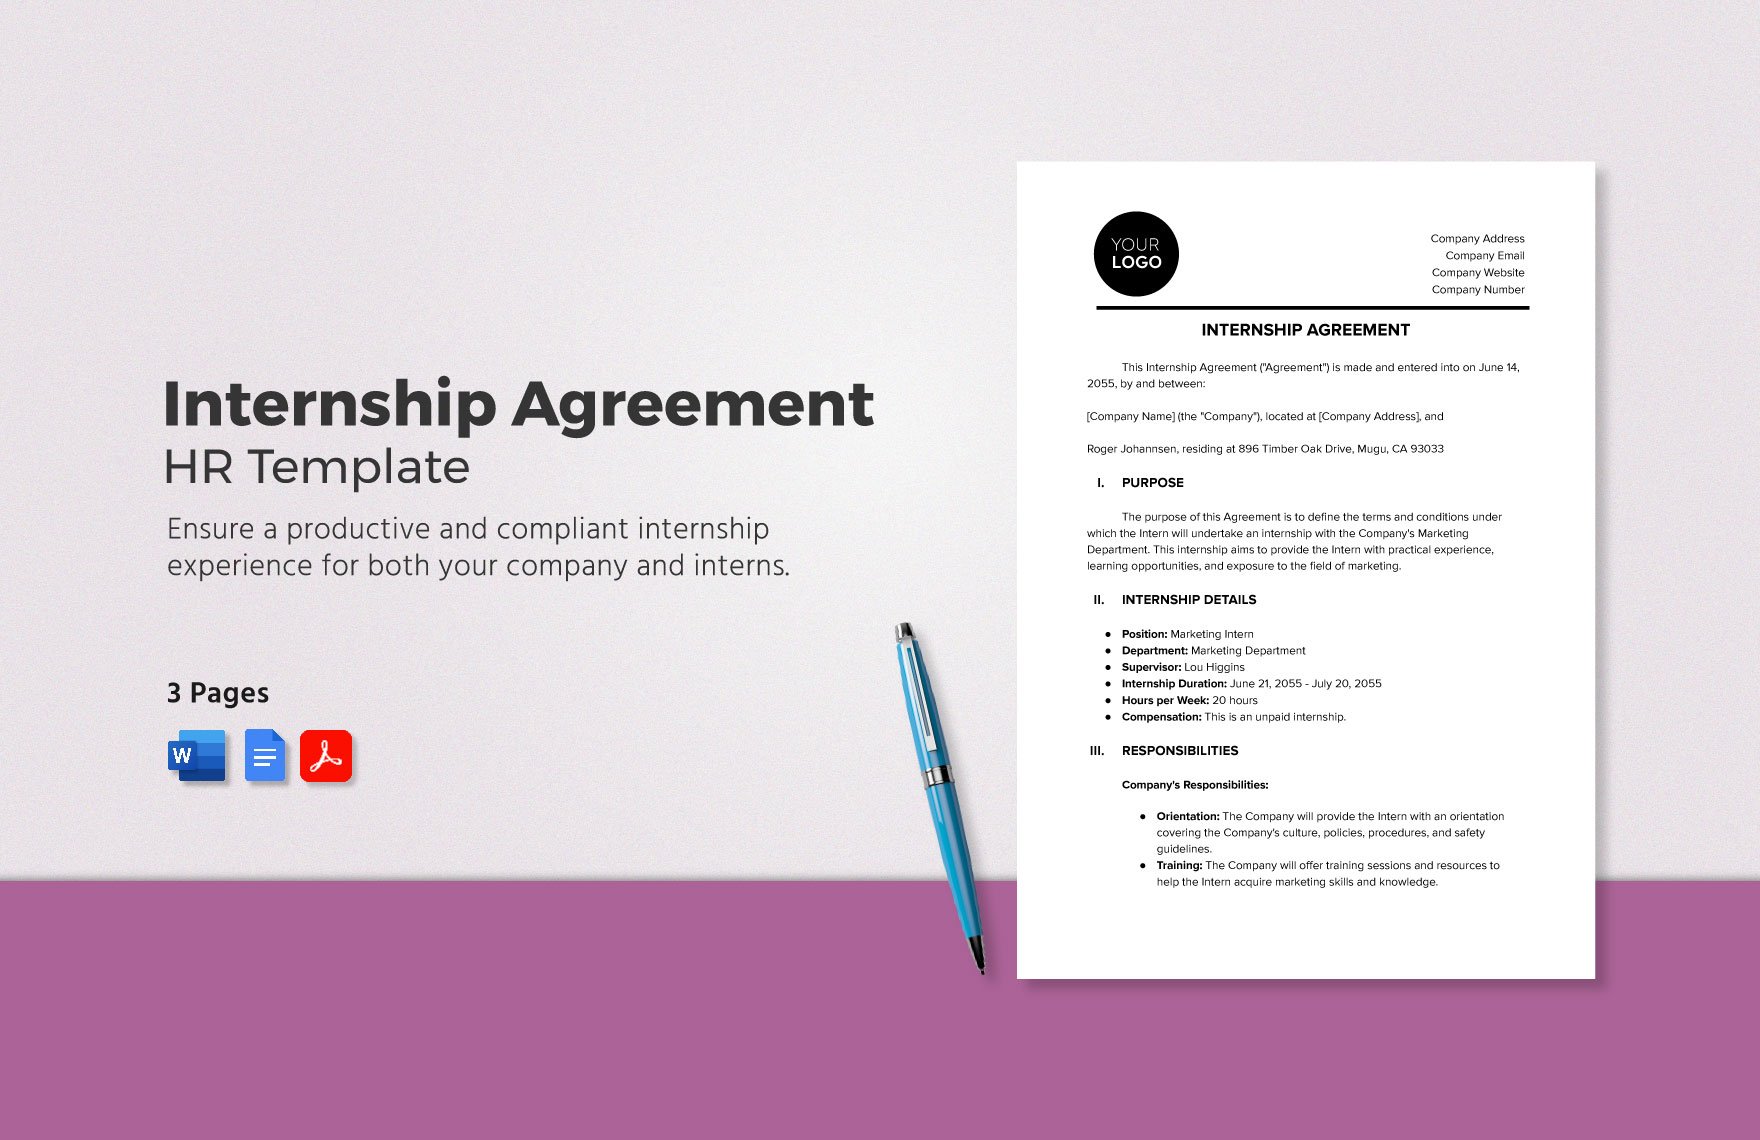 Internship Agreement HR Template in Word, Google Docs, PDF